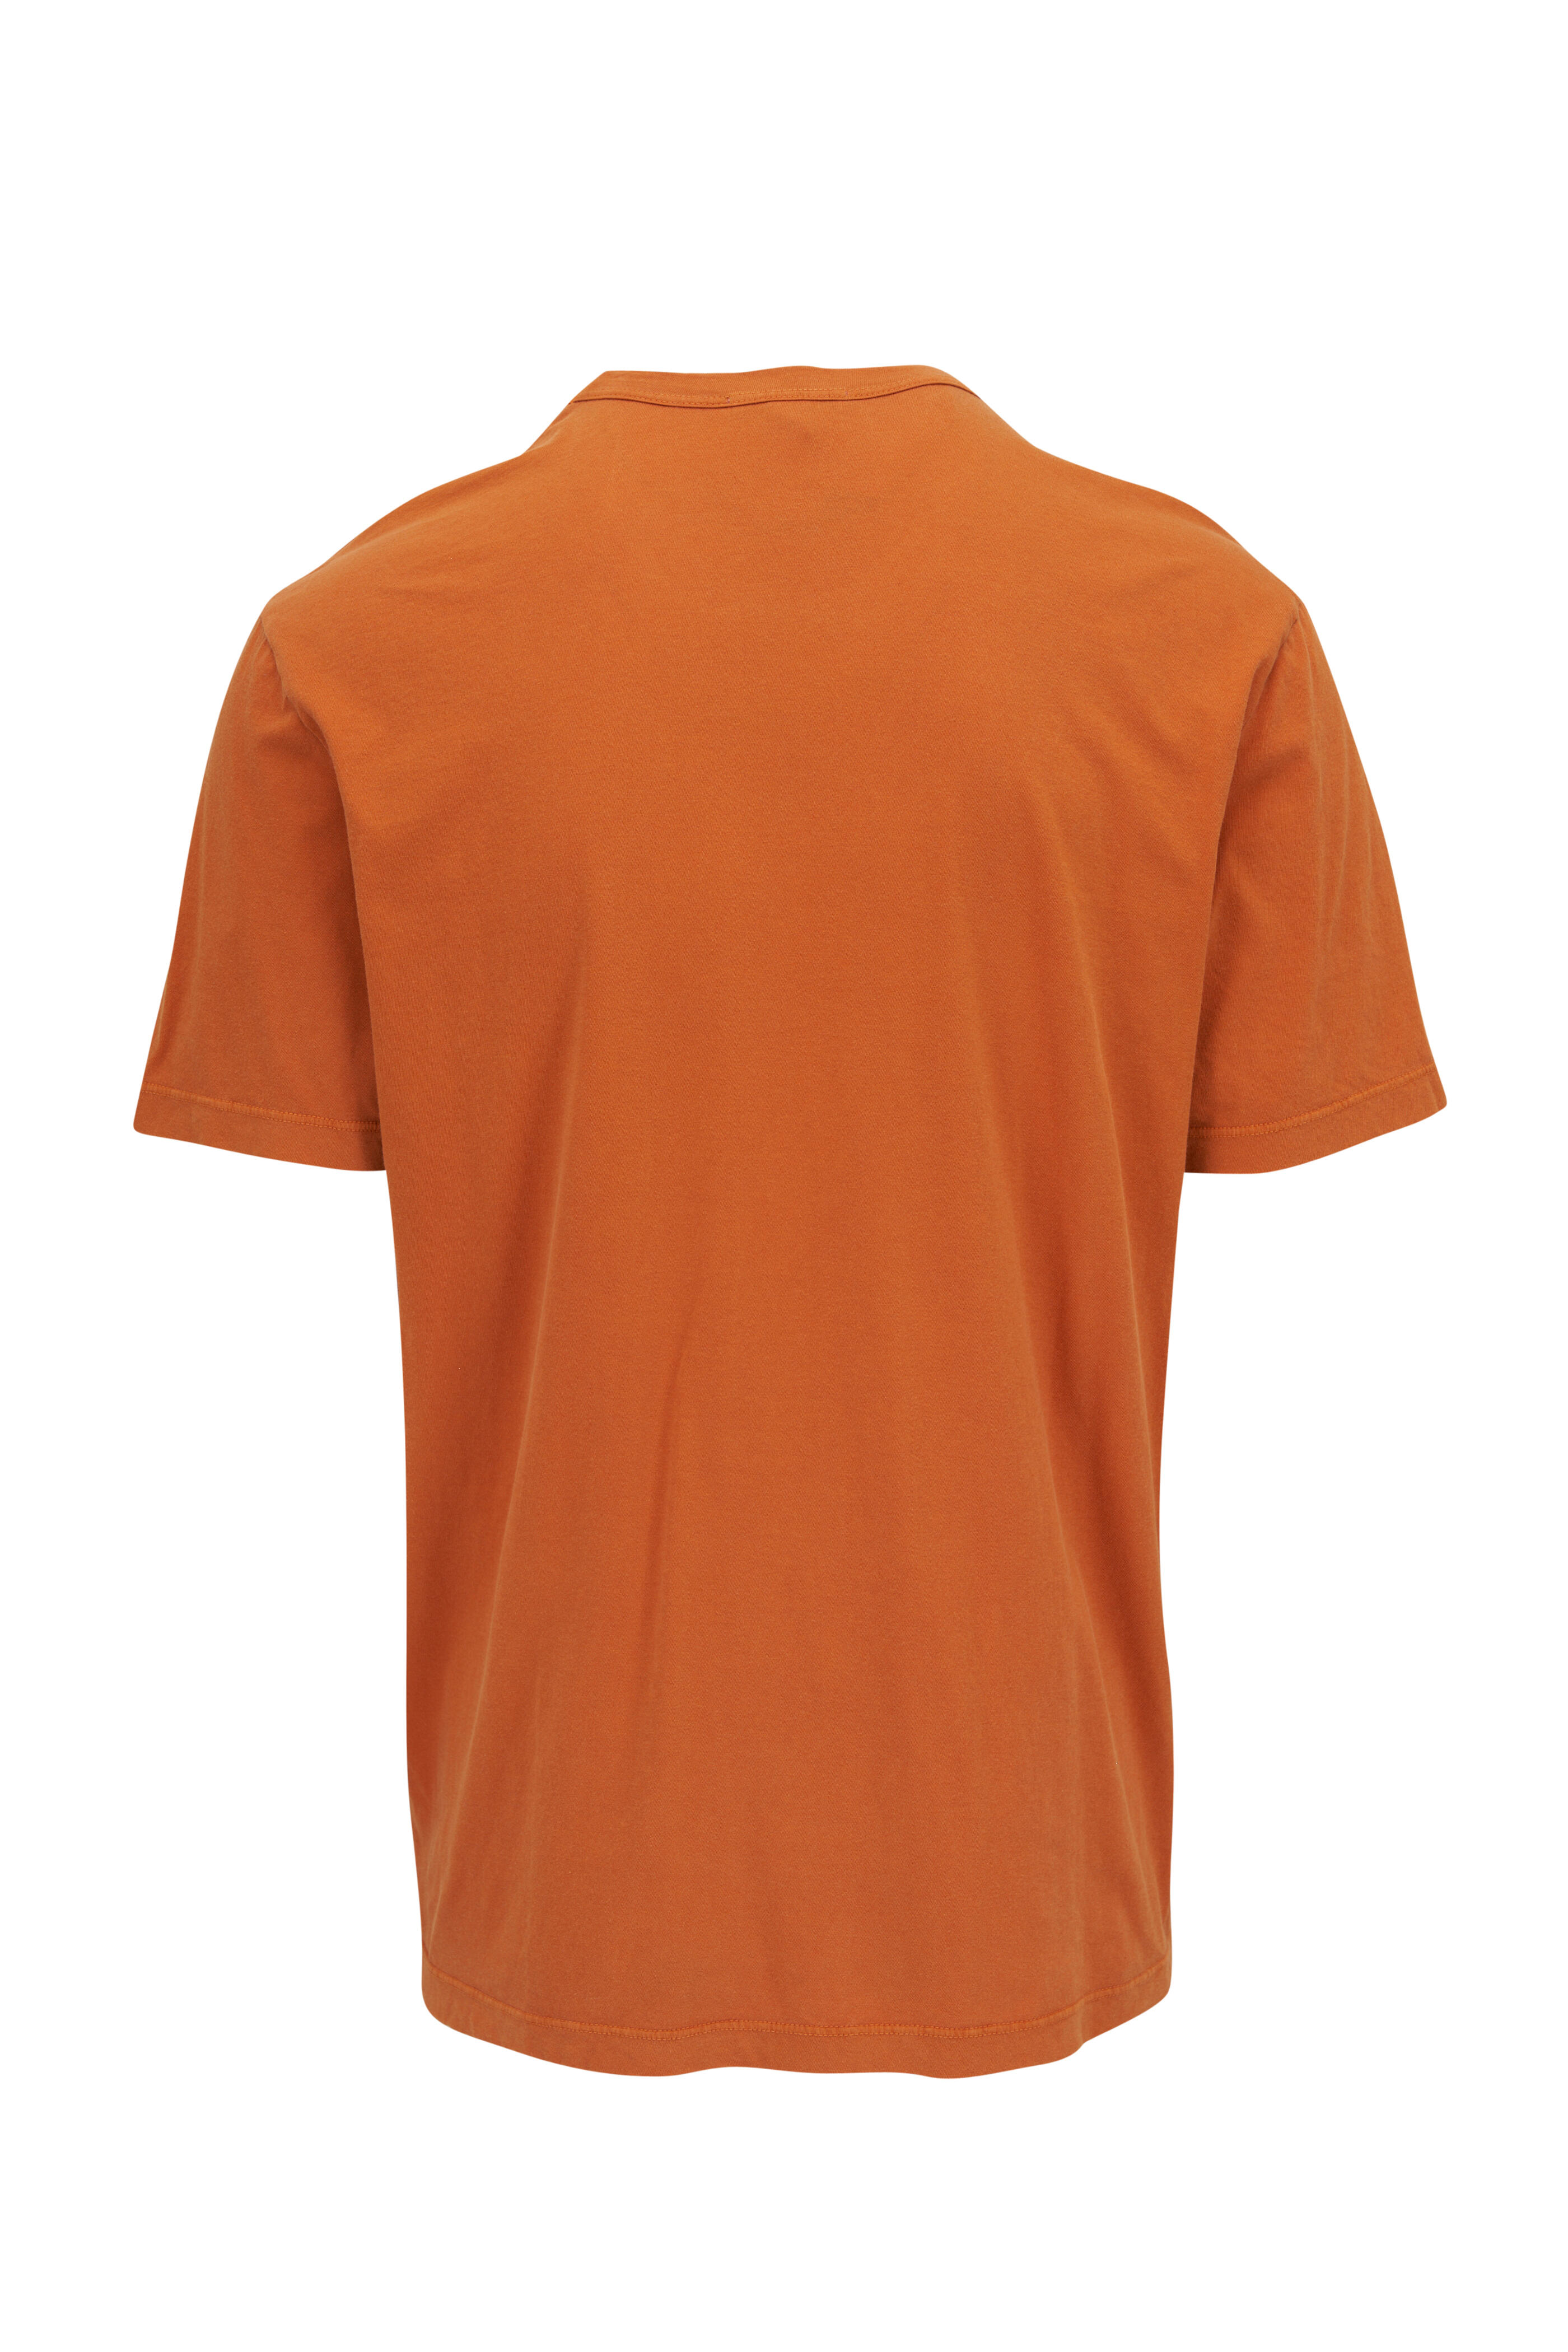 James Perse - Citrine Clay Cotton Crewneck T-Shirt